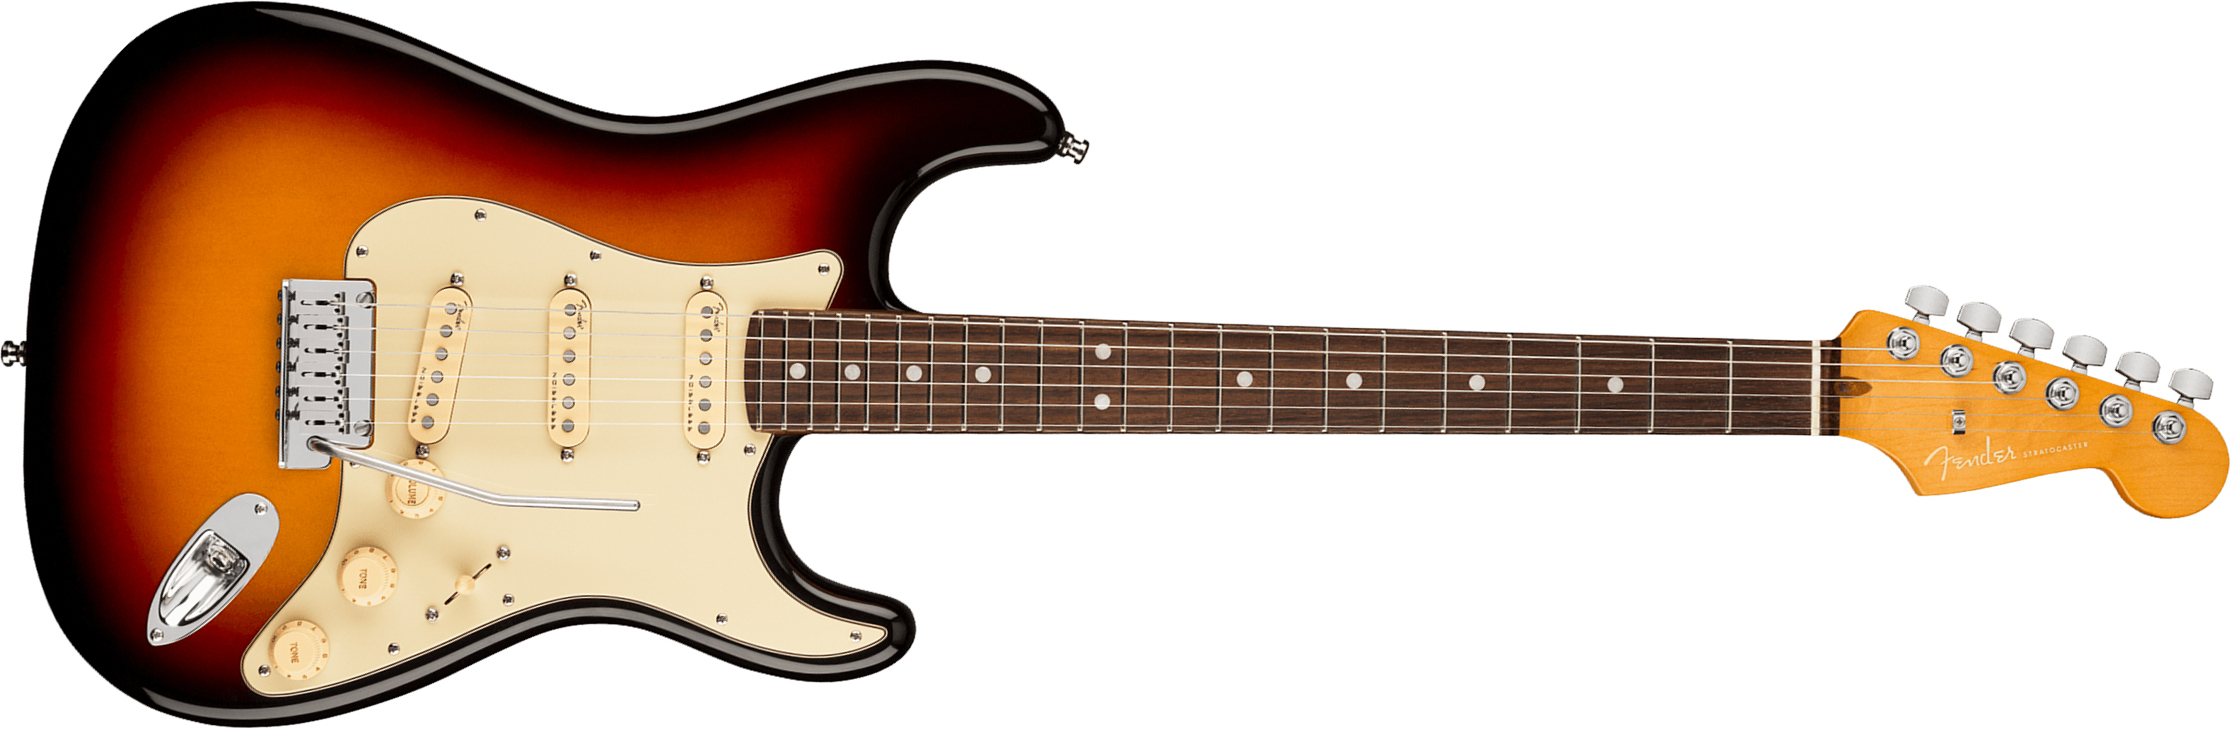 Fender Strat American Ultra 2019 Usa Rw - Ultraburst - Str shape electric guitar - Main picture